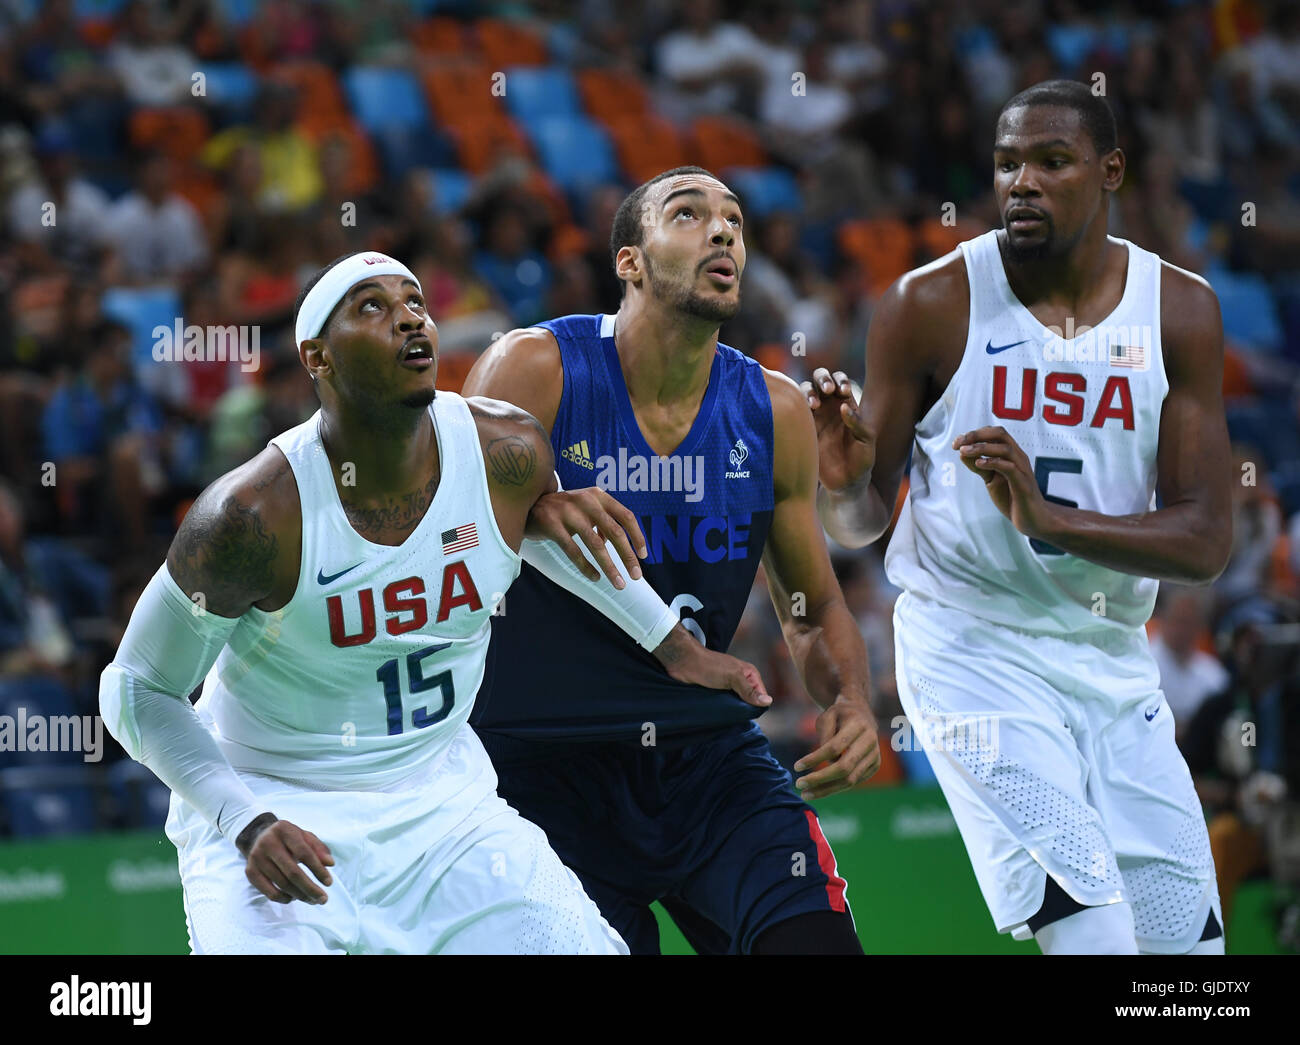 USA basketball icon Carmelo Anthony named Global Ambassador for